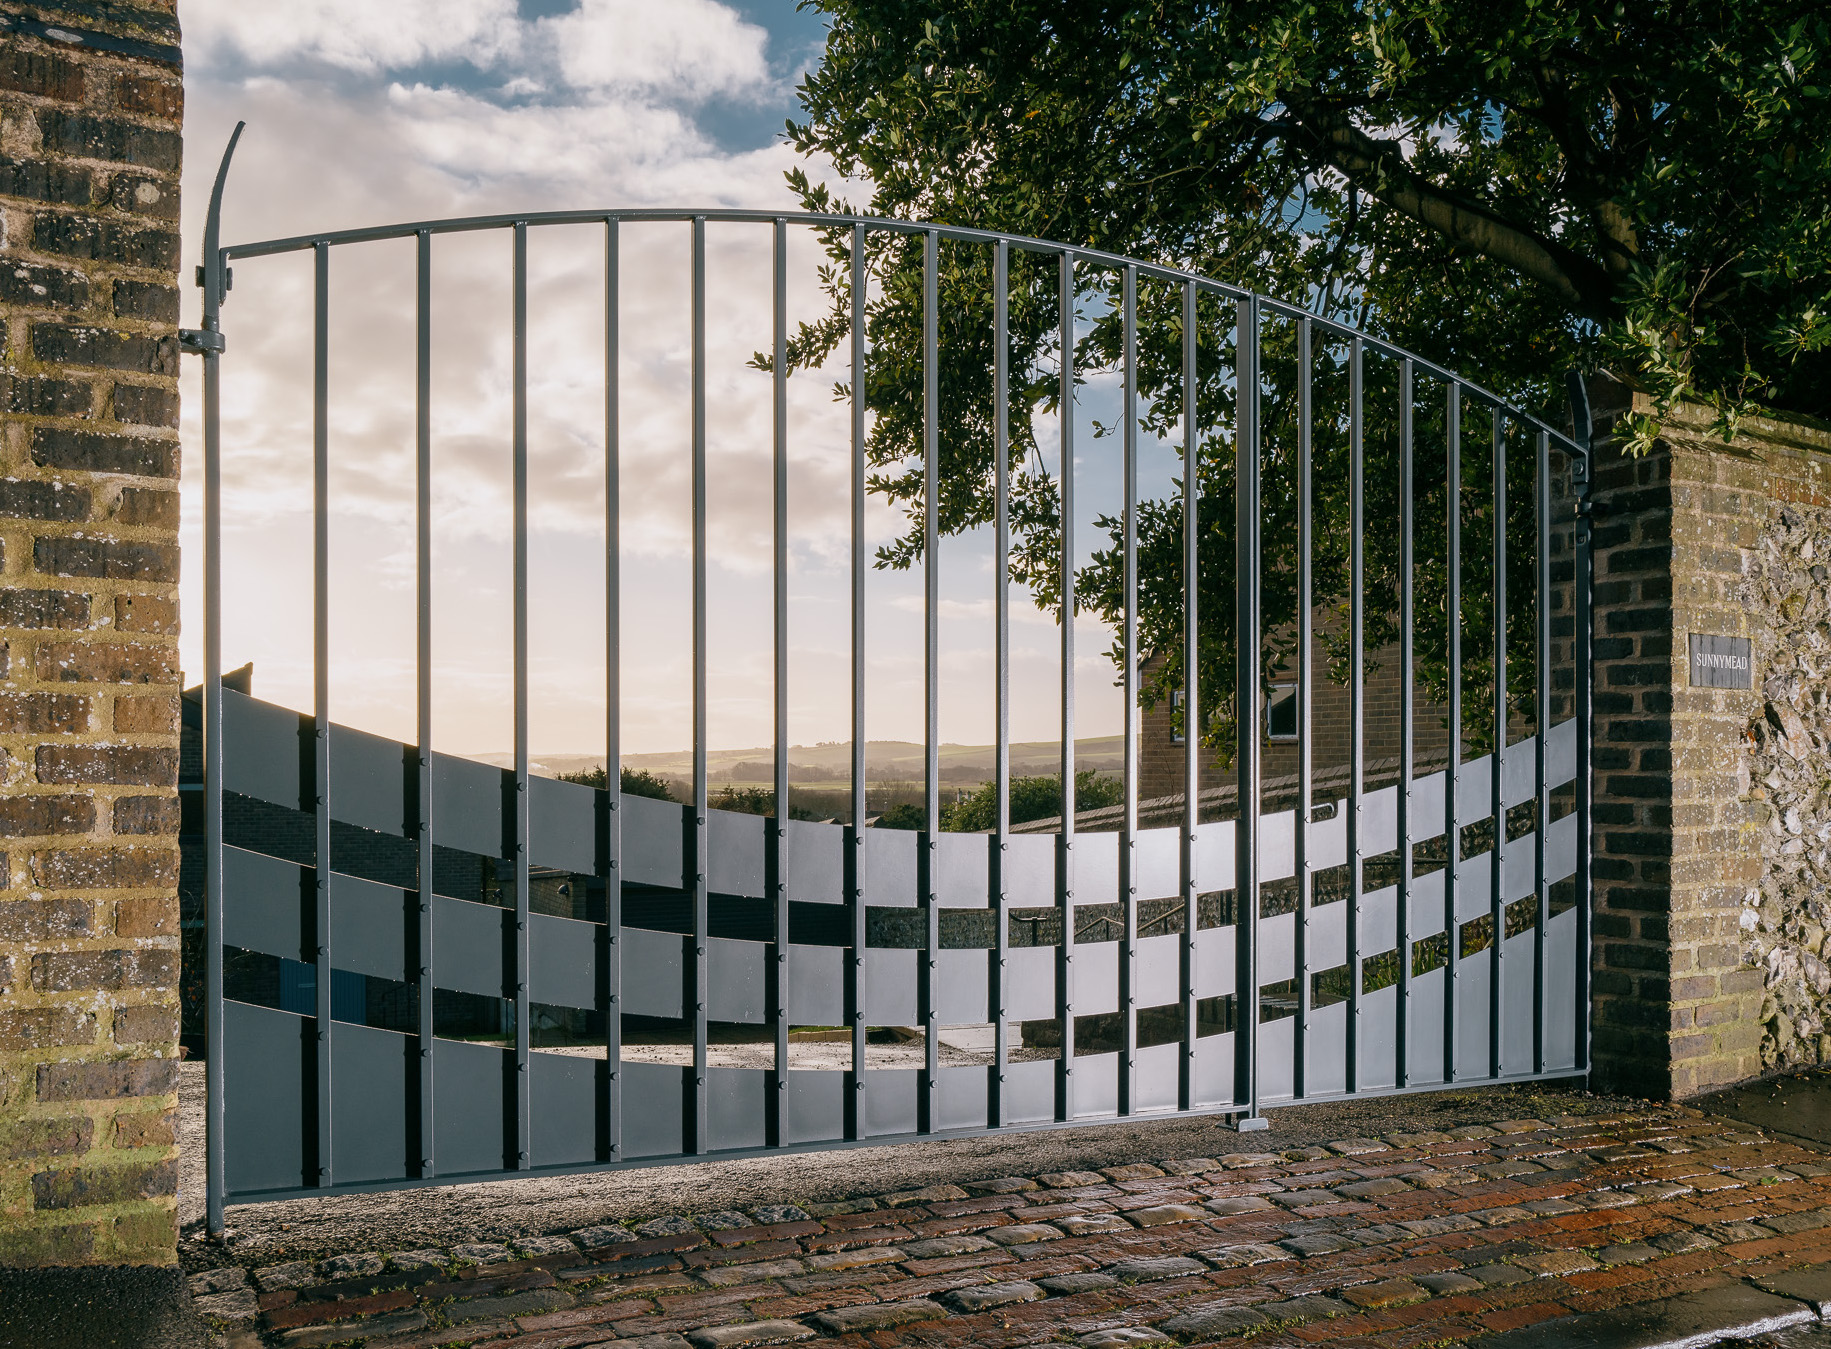 Plate-entrance-gates-ironwork-driveway-gate